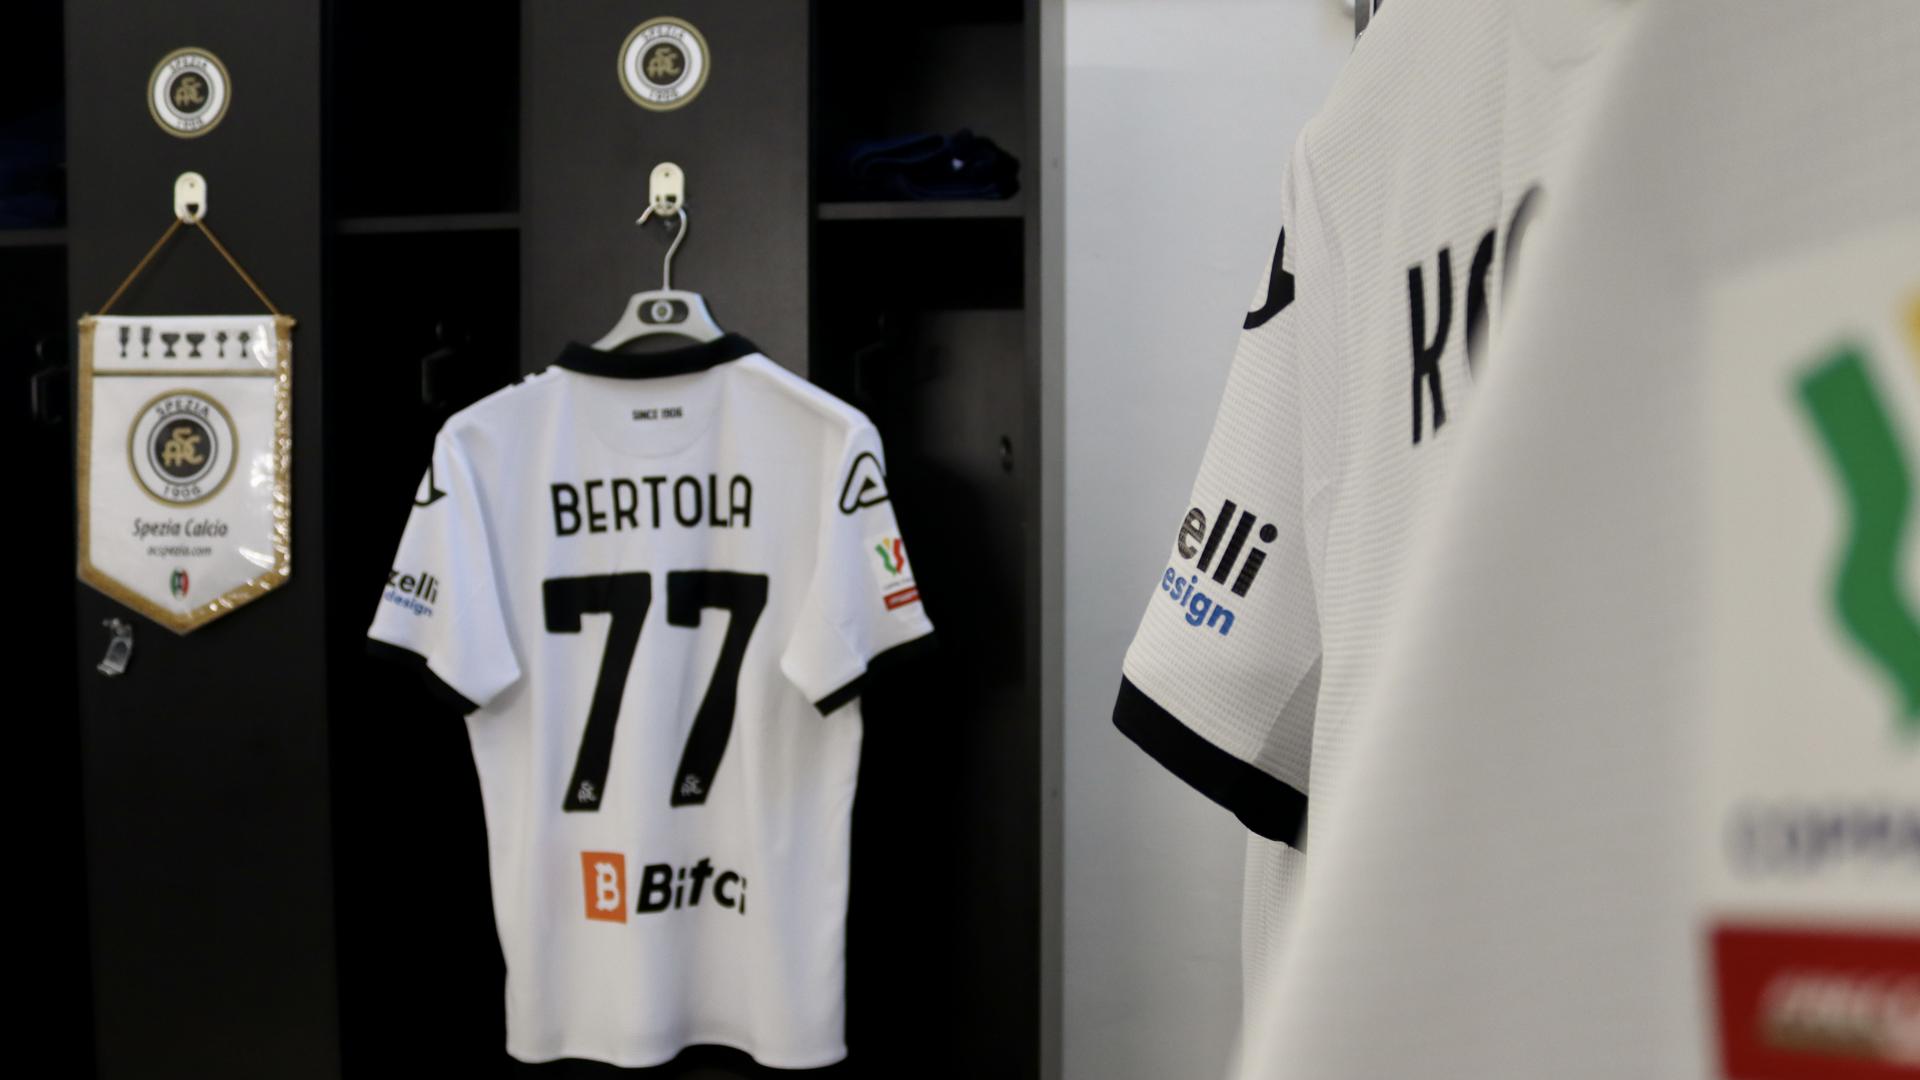 Spezia-Lecce: debut with the white shirt for Bertola